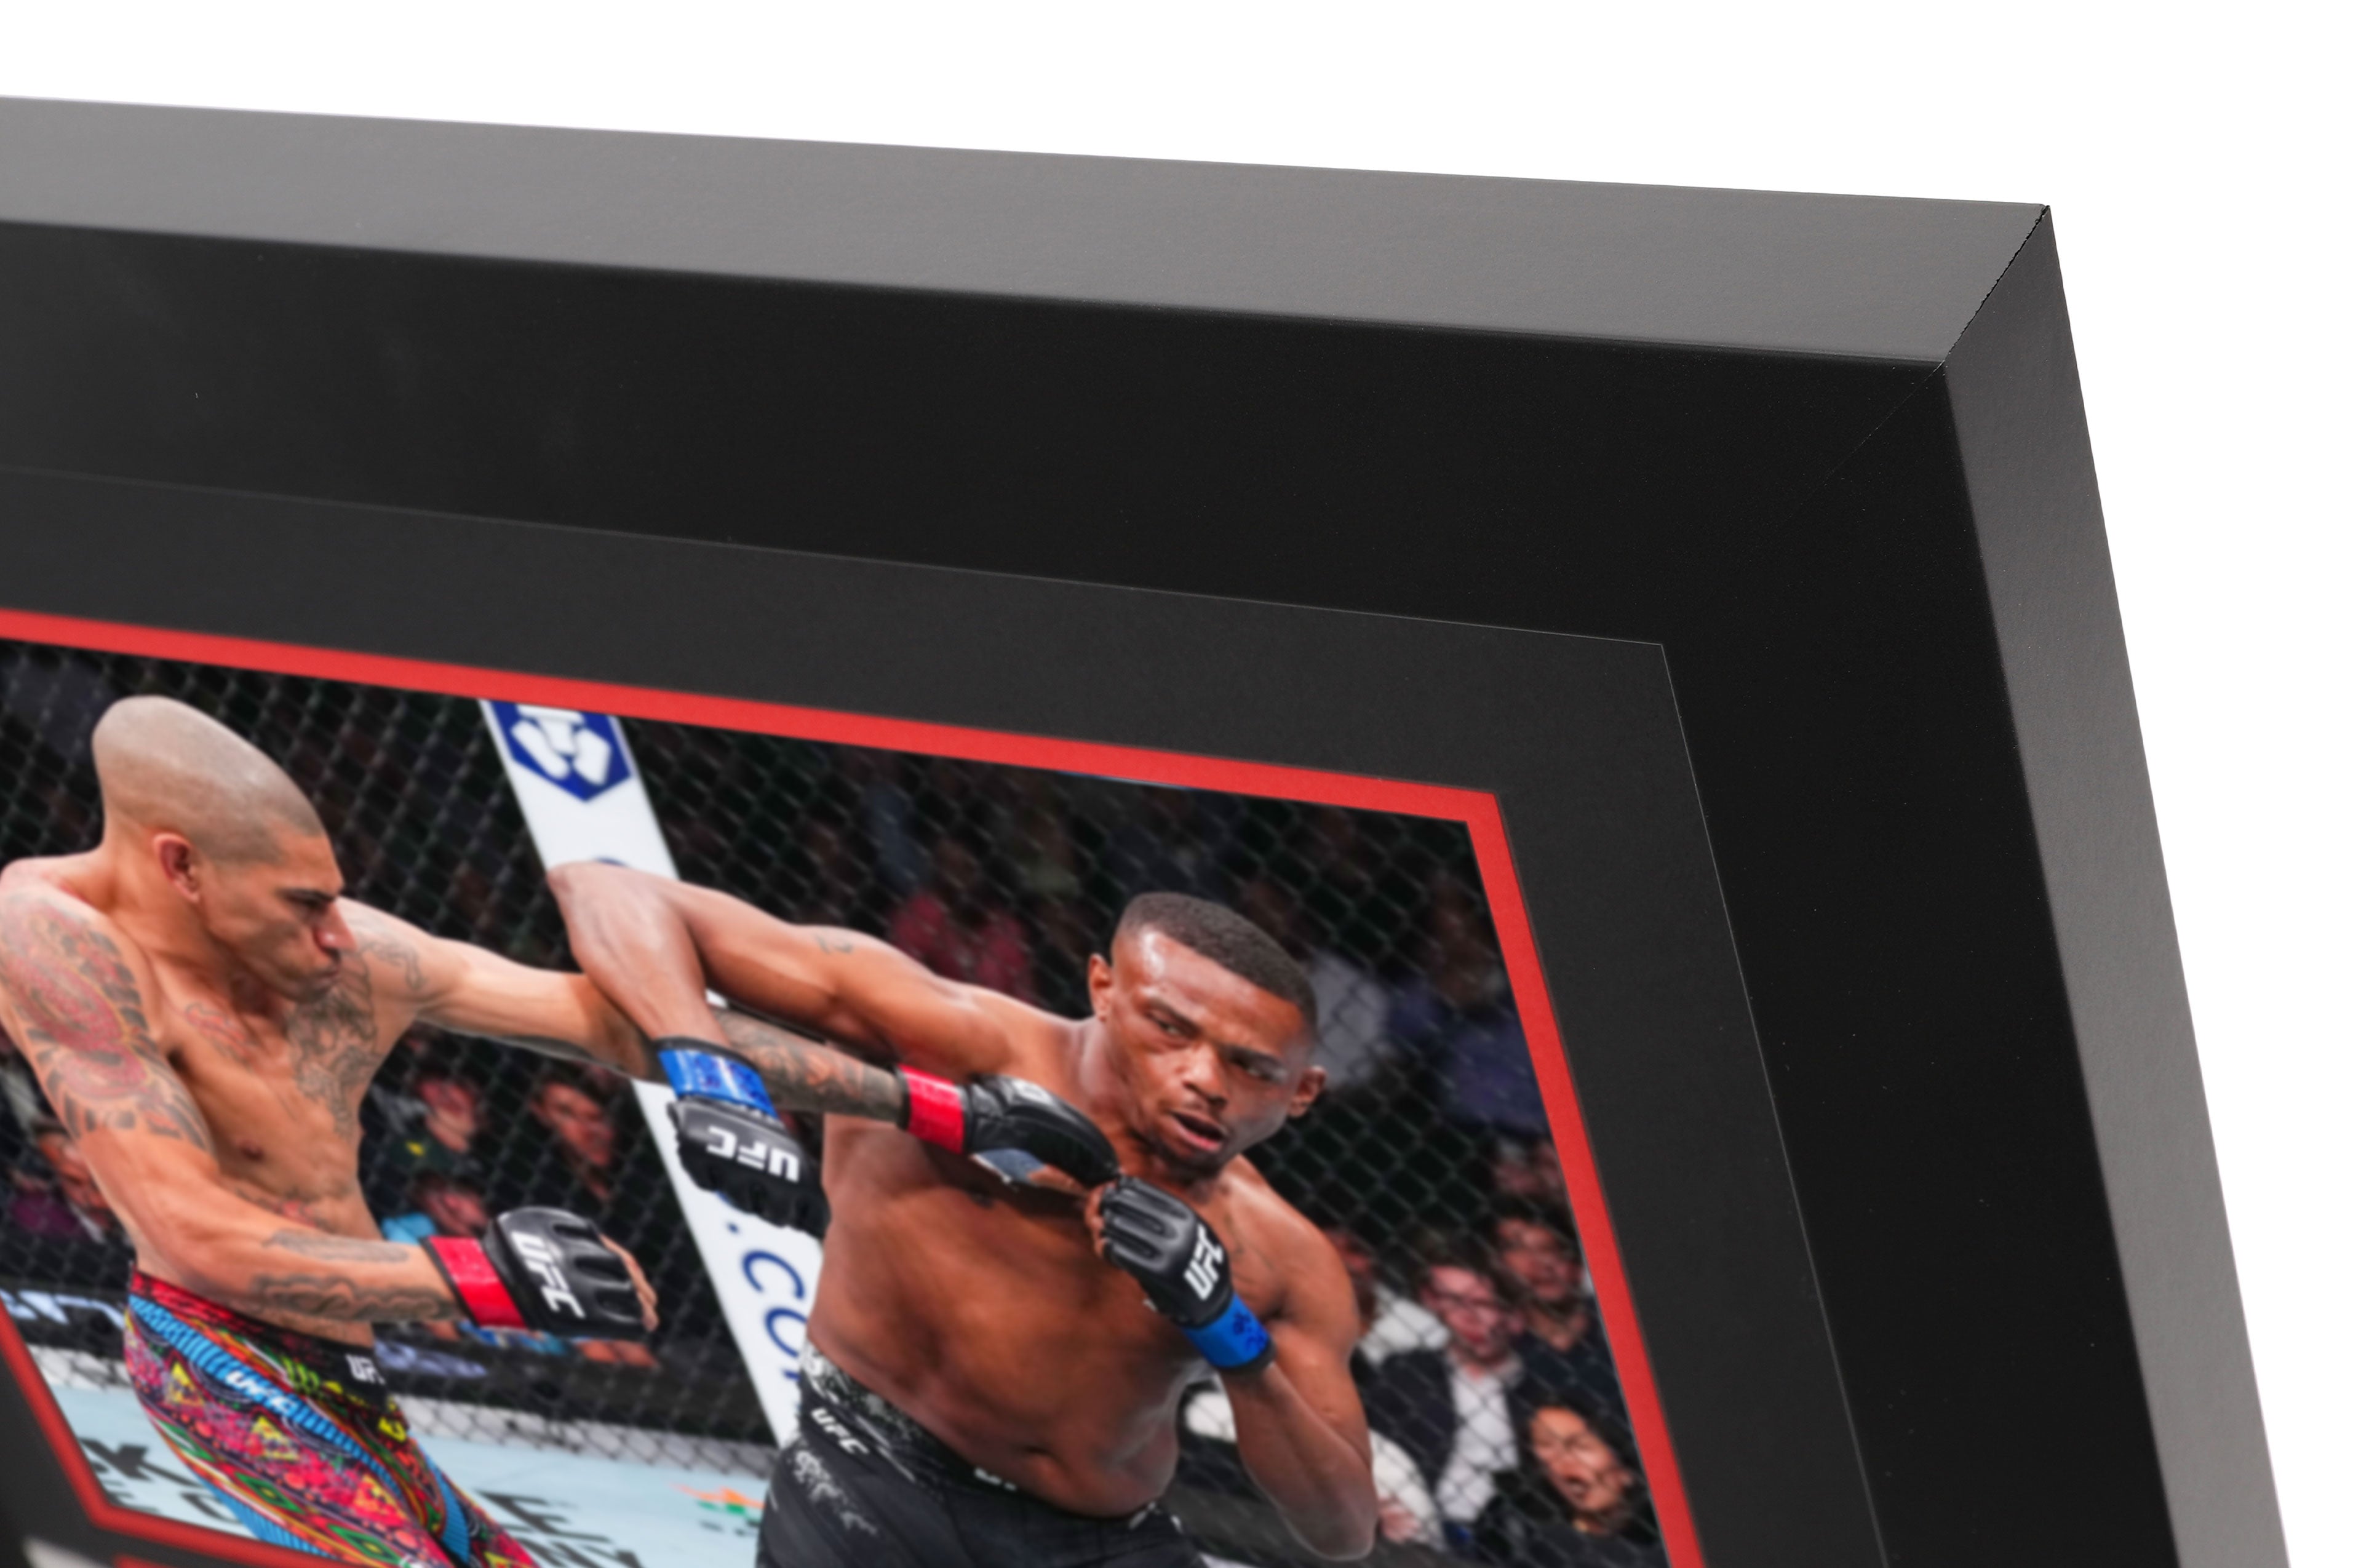 UFC 300: Pereira vs Hill Canvas & Photo